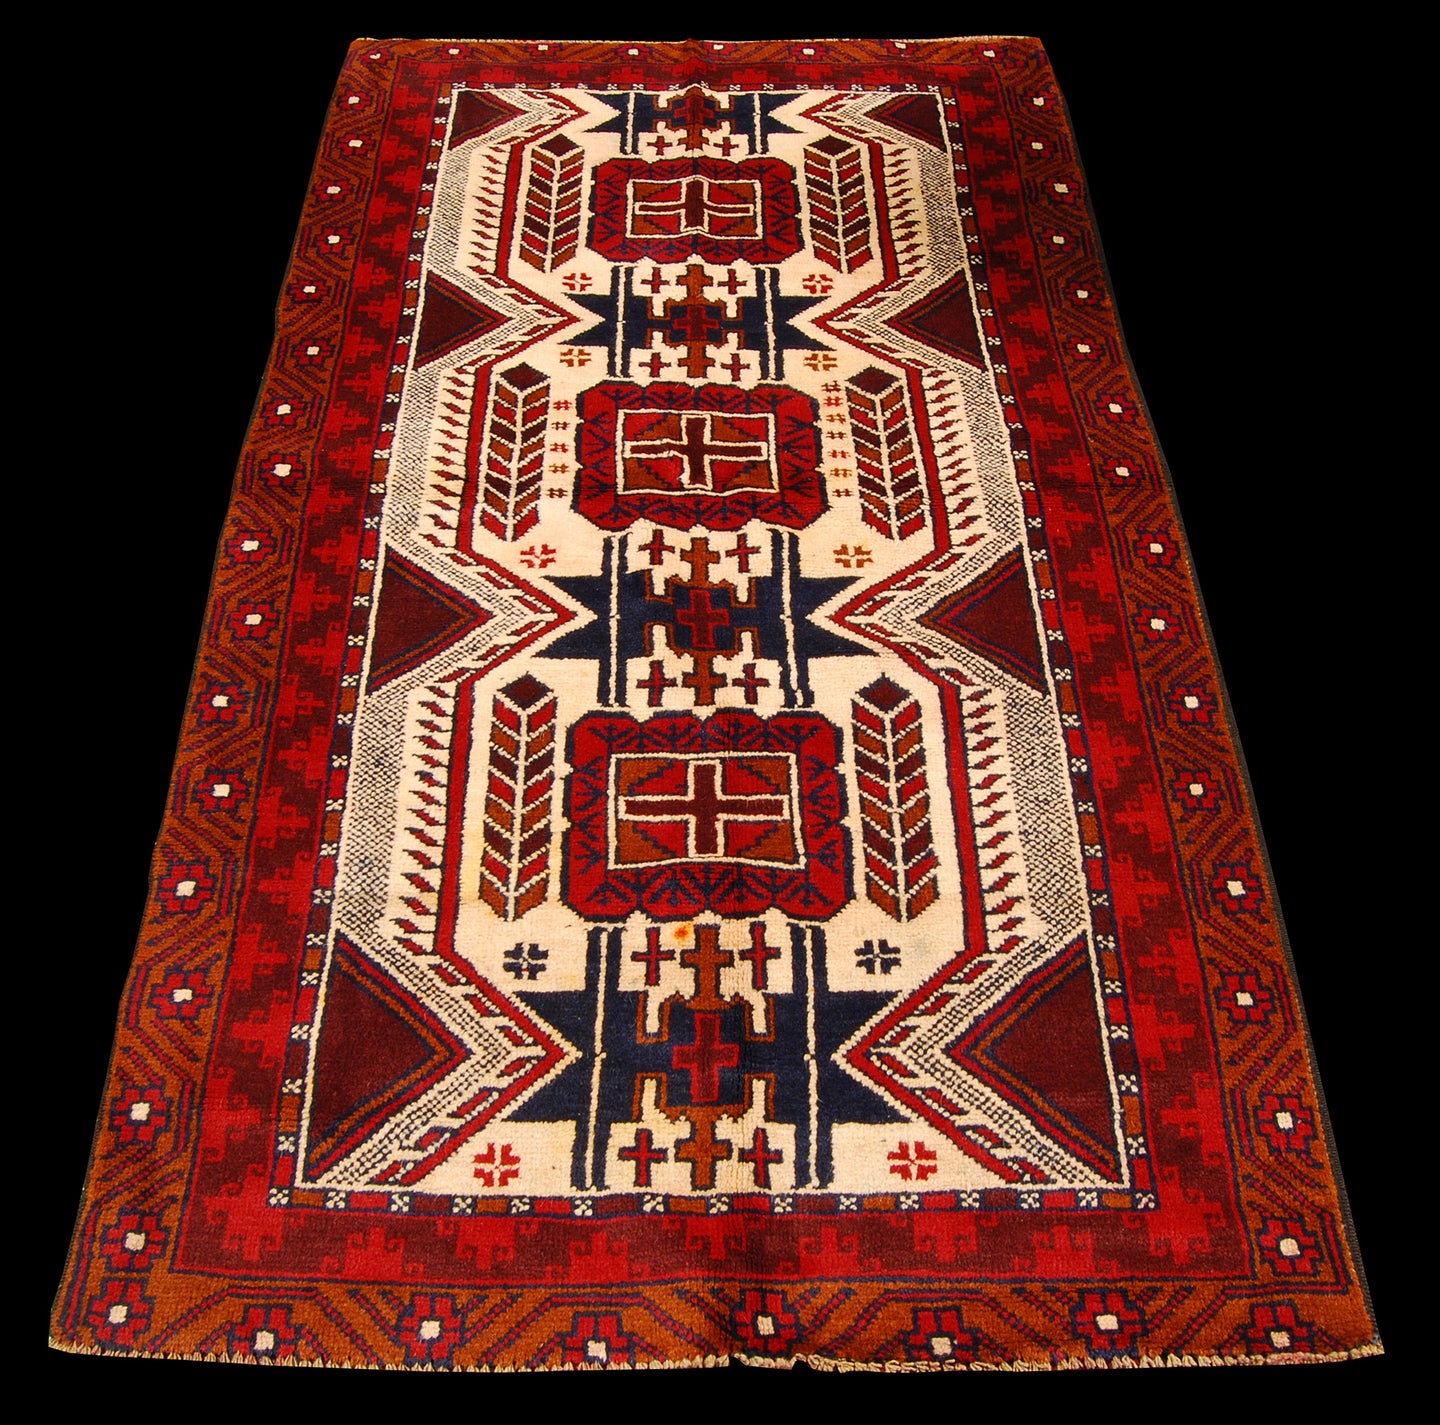 Genuine, Original Pure Wool Rug Rustic Handmad Carpet CM 189x106